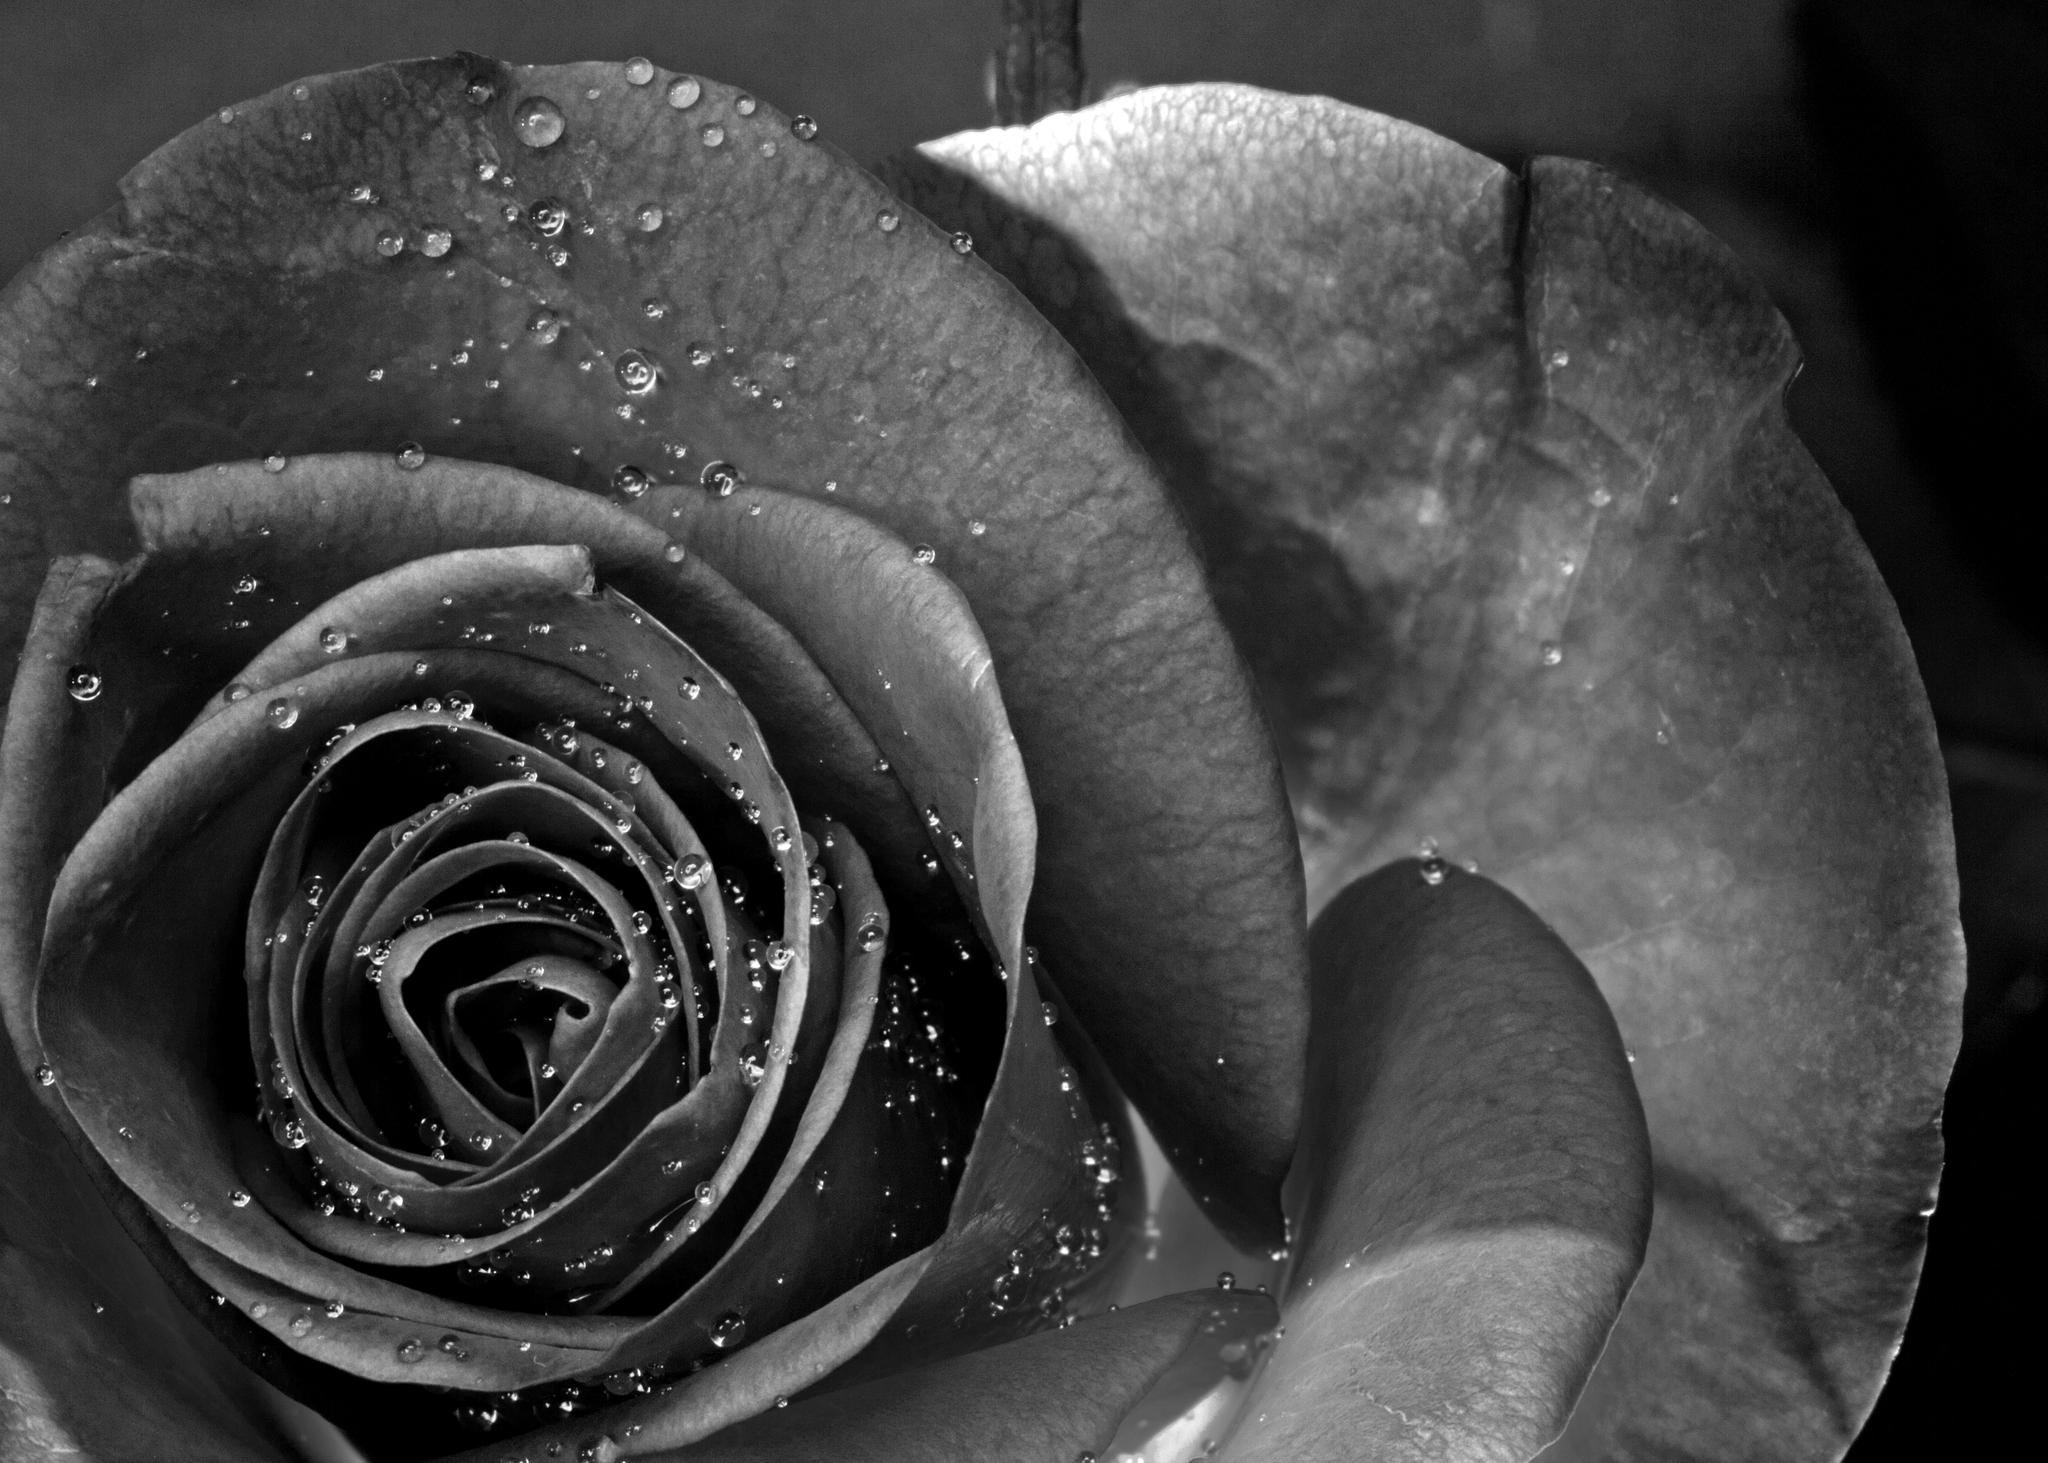 , Flower, Beauty, Texture, Black, Rose Wallpaper